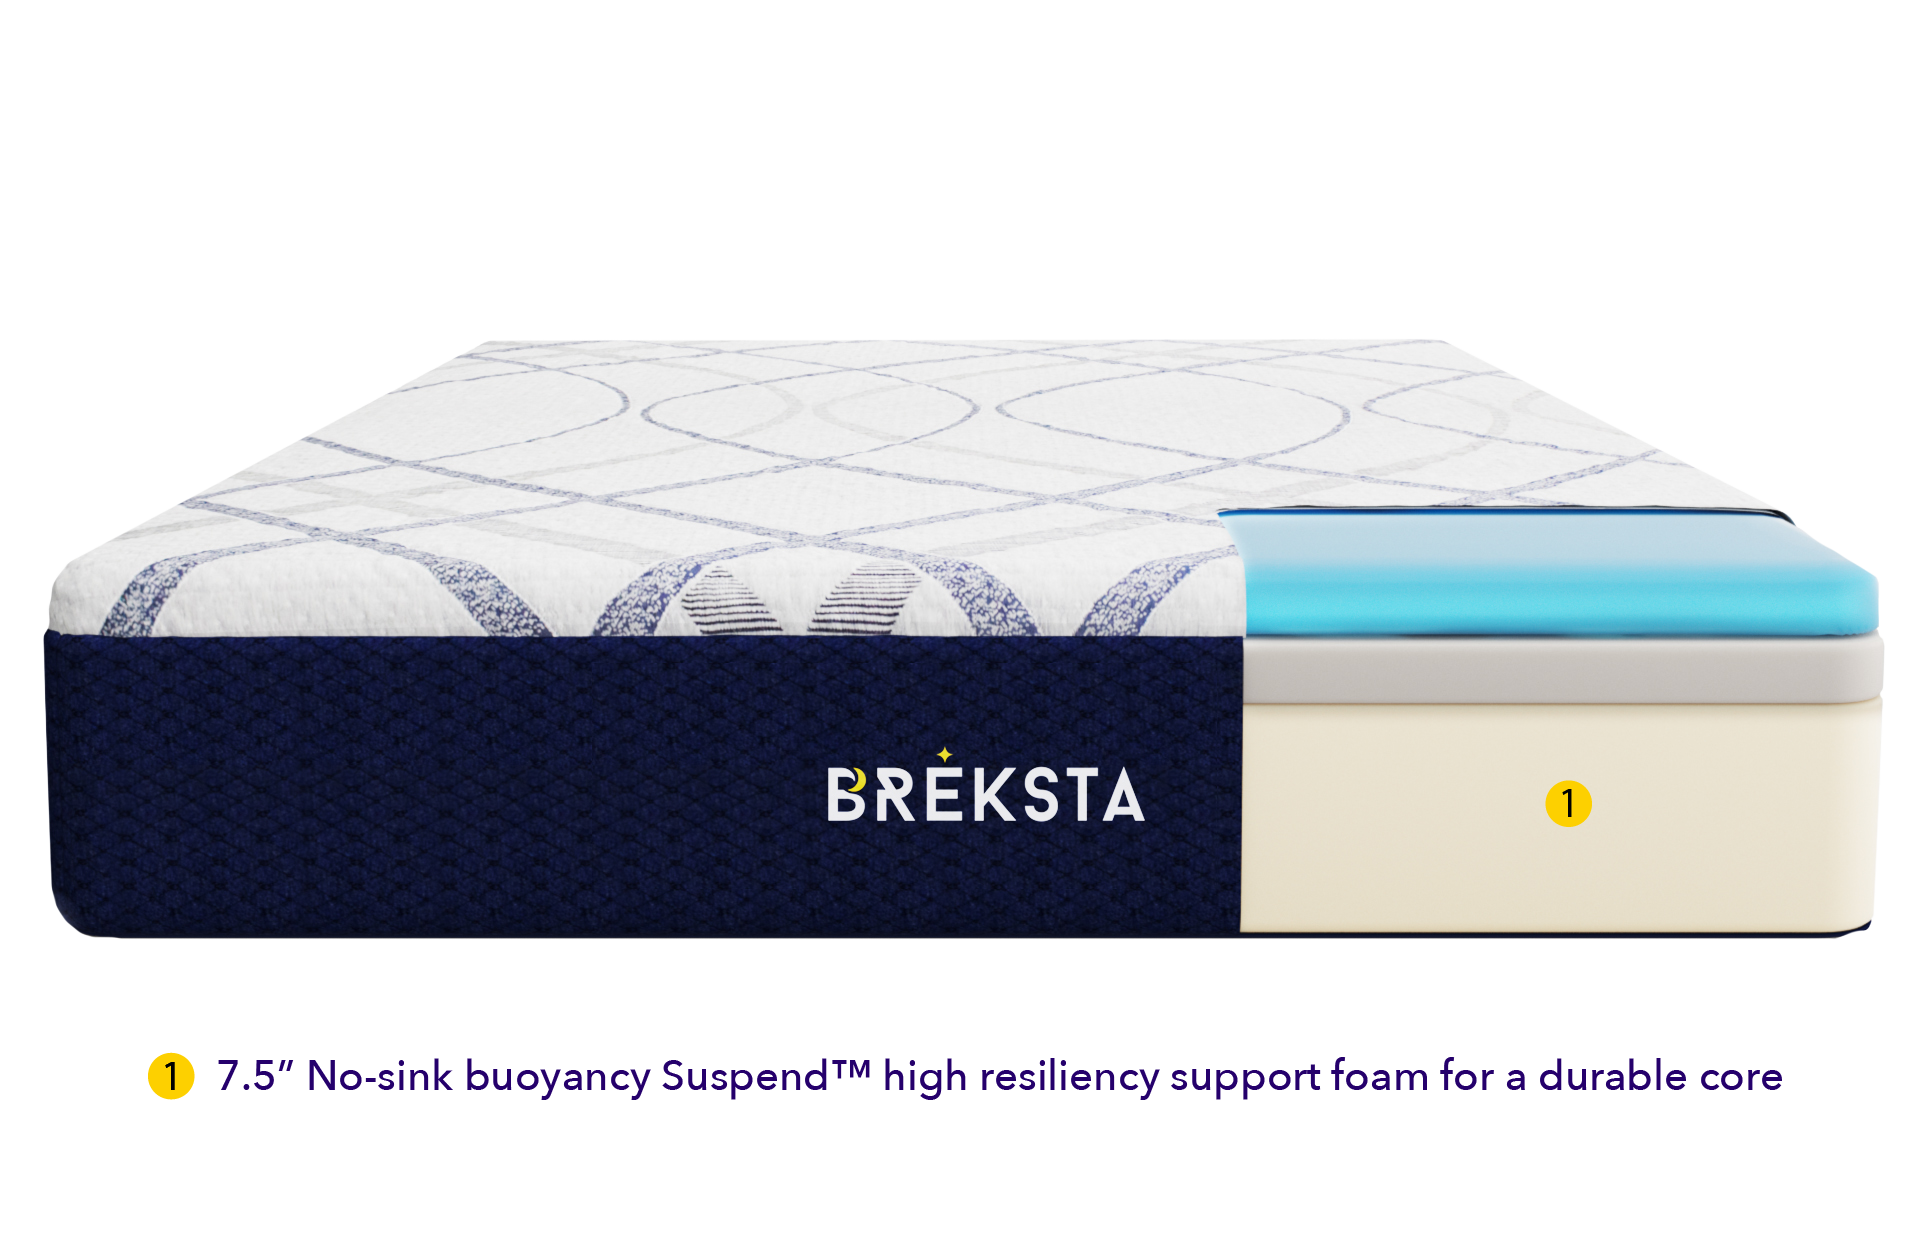  Breksta memory foam mattress